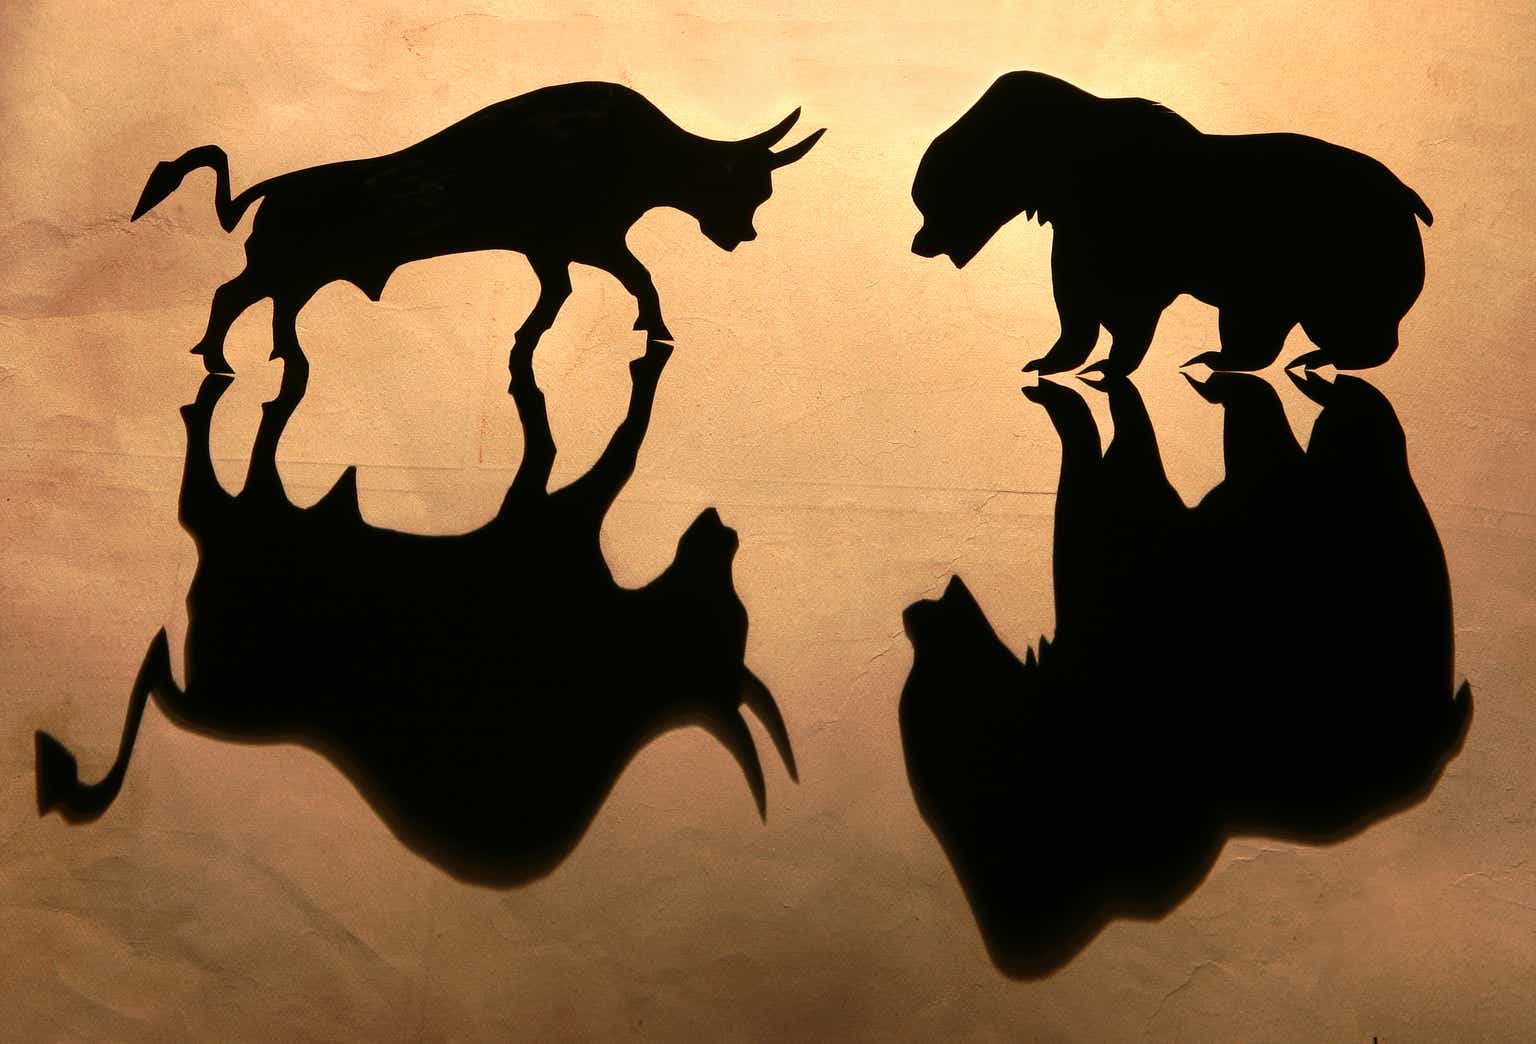 Nvidia's Path Forward: Weighing The Bull And Bear Cases (NASDAQ:NVDA)